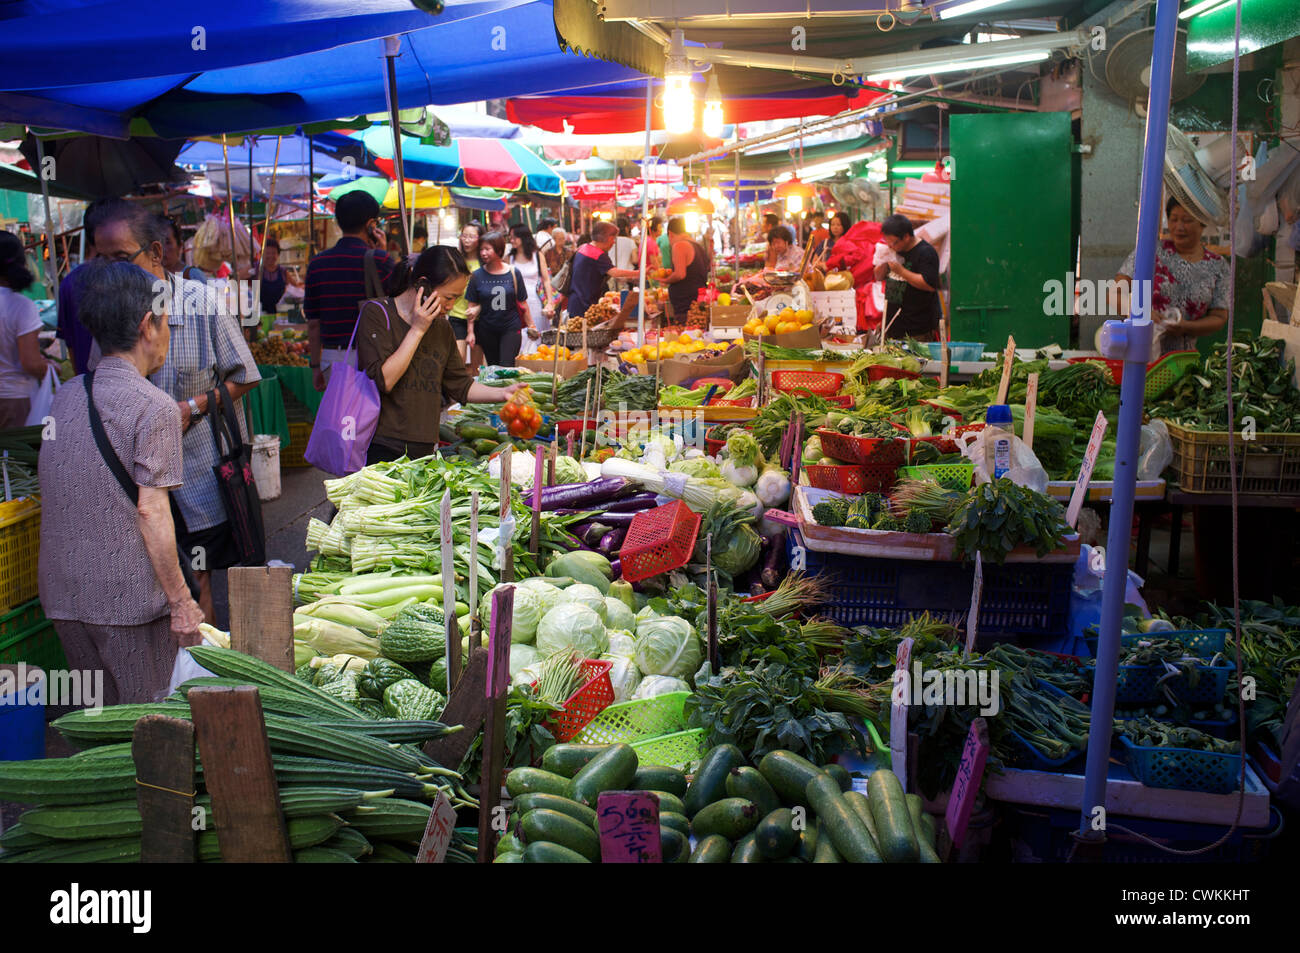 El mercado de alimentos de Hong Kong. 27-Aug-2012 Foto de stock